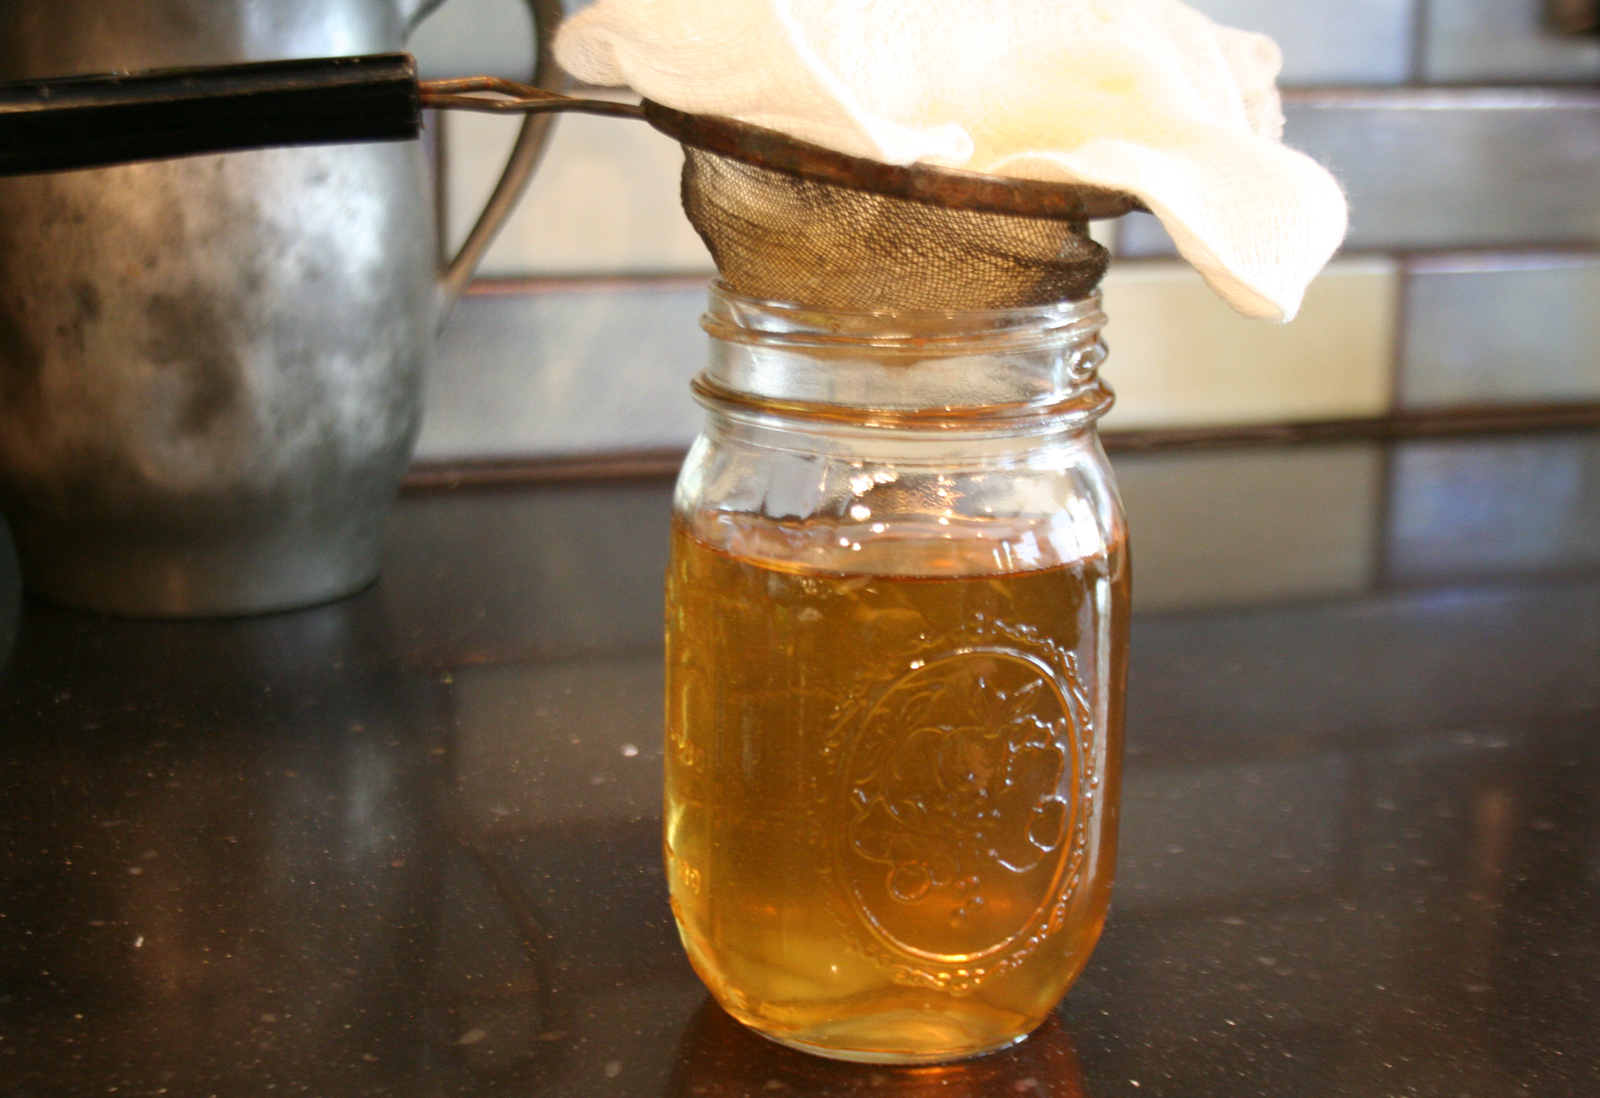 Straining the liquid lard into a jar